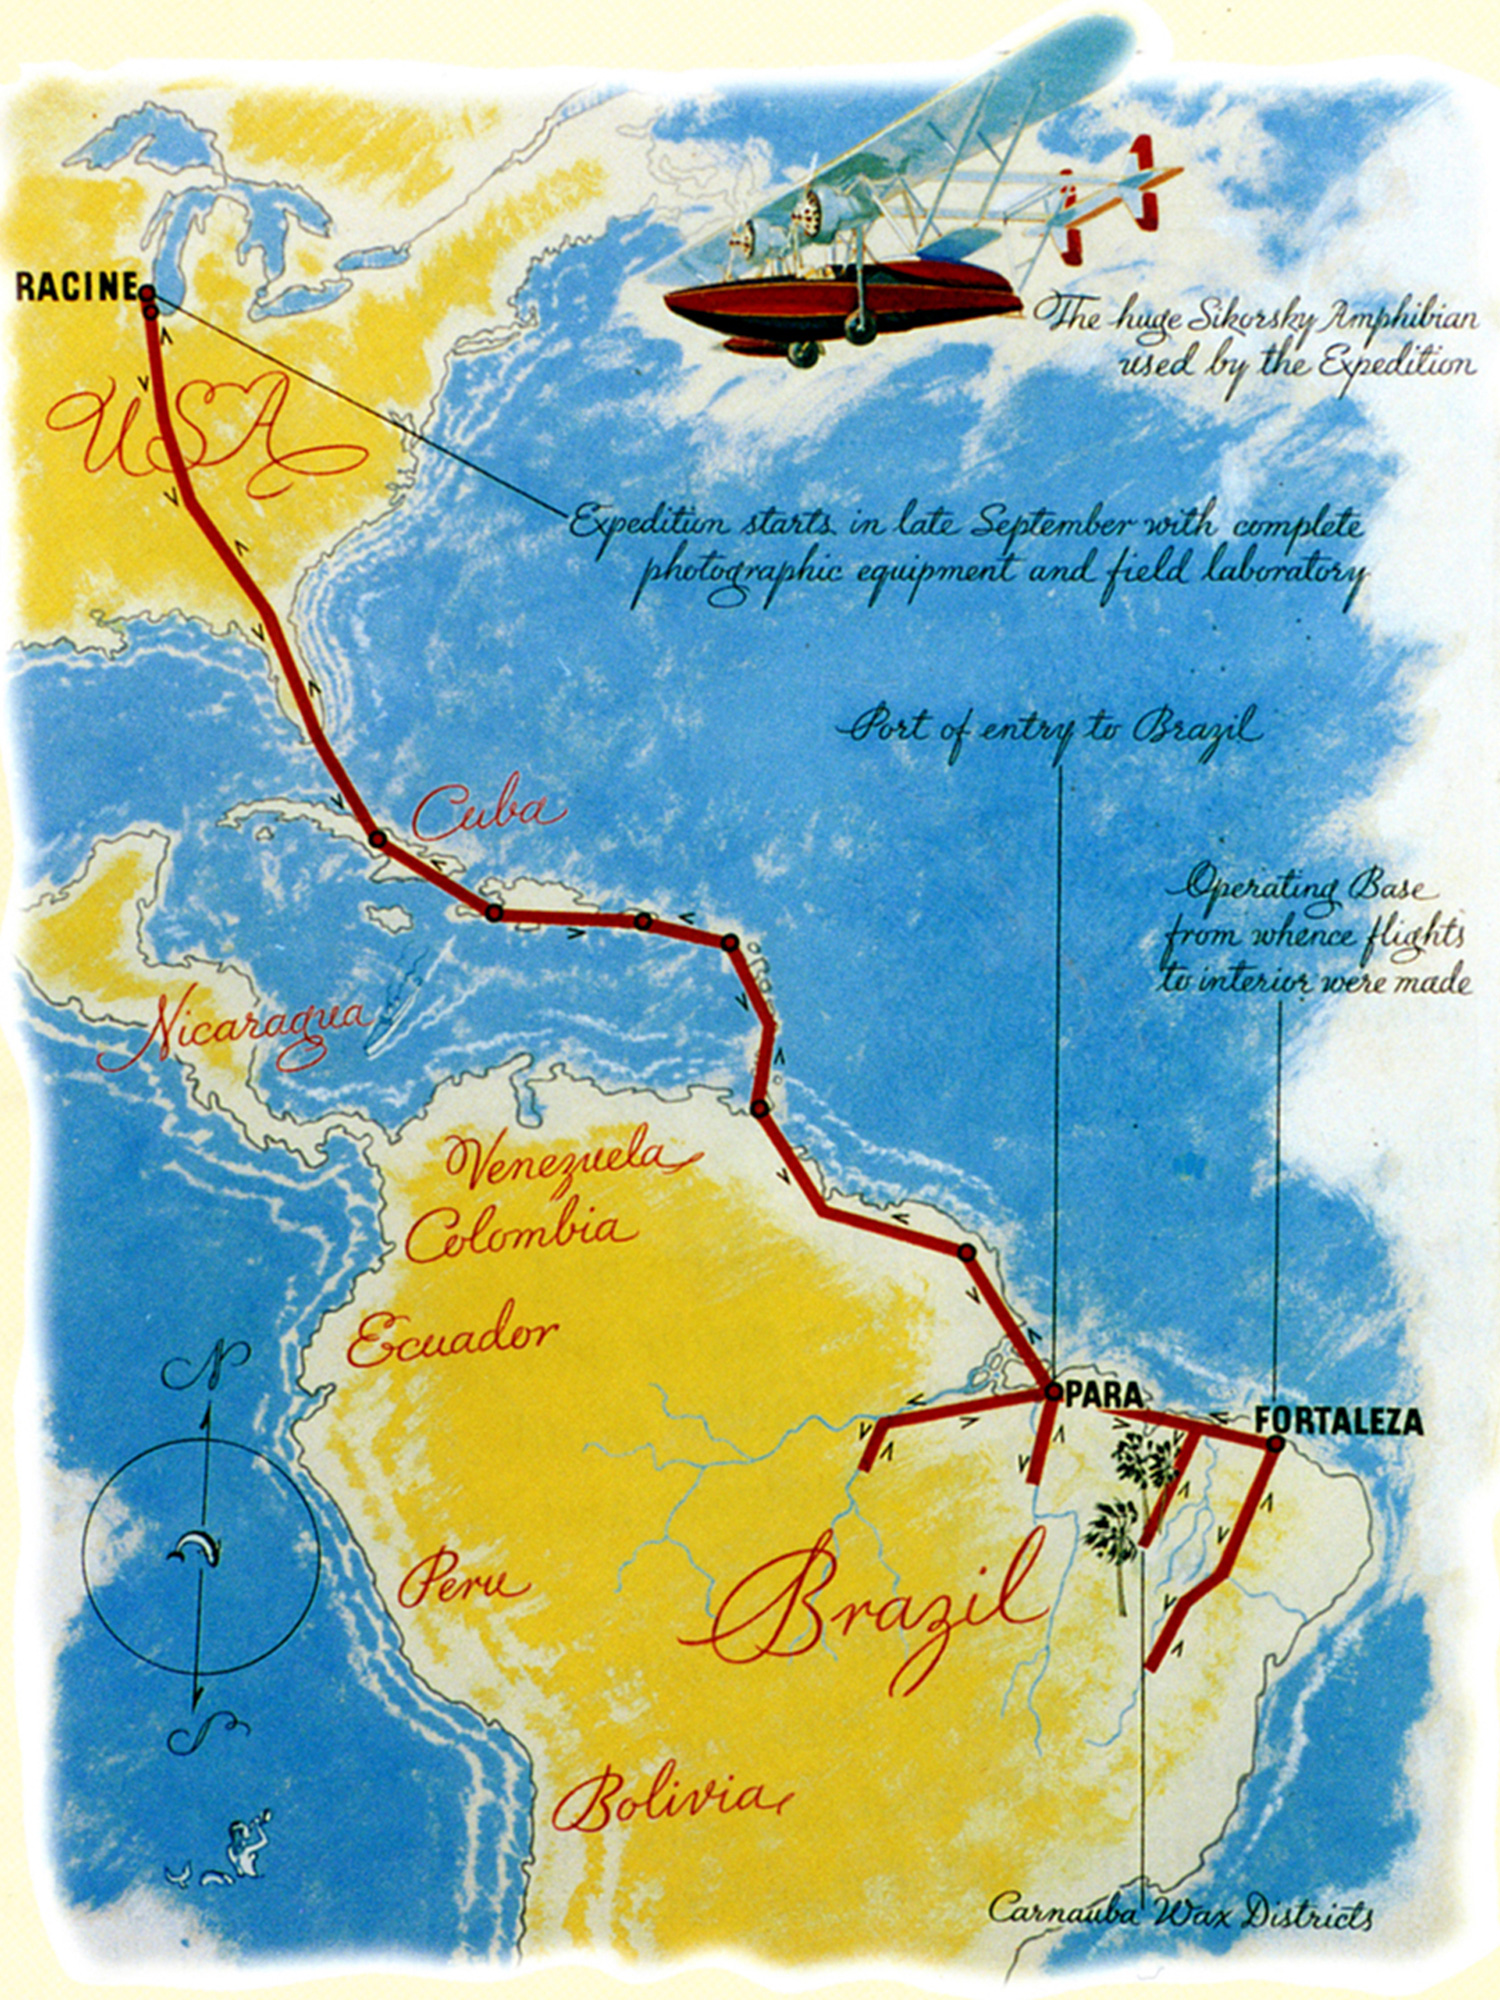 H.F. Johnson Jr. 在 1935 年前往巴西寻找巴西棕榈蜡的飞行路线。